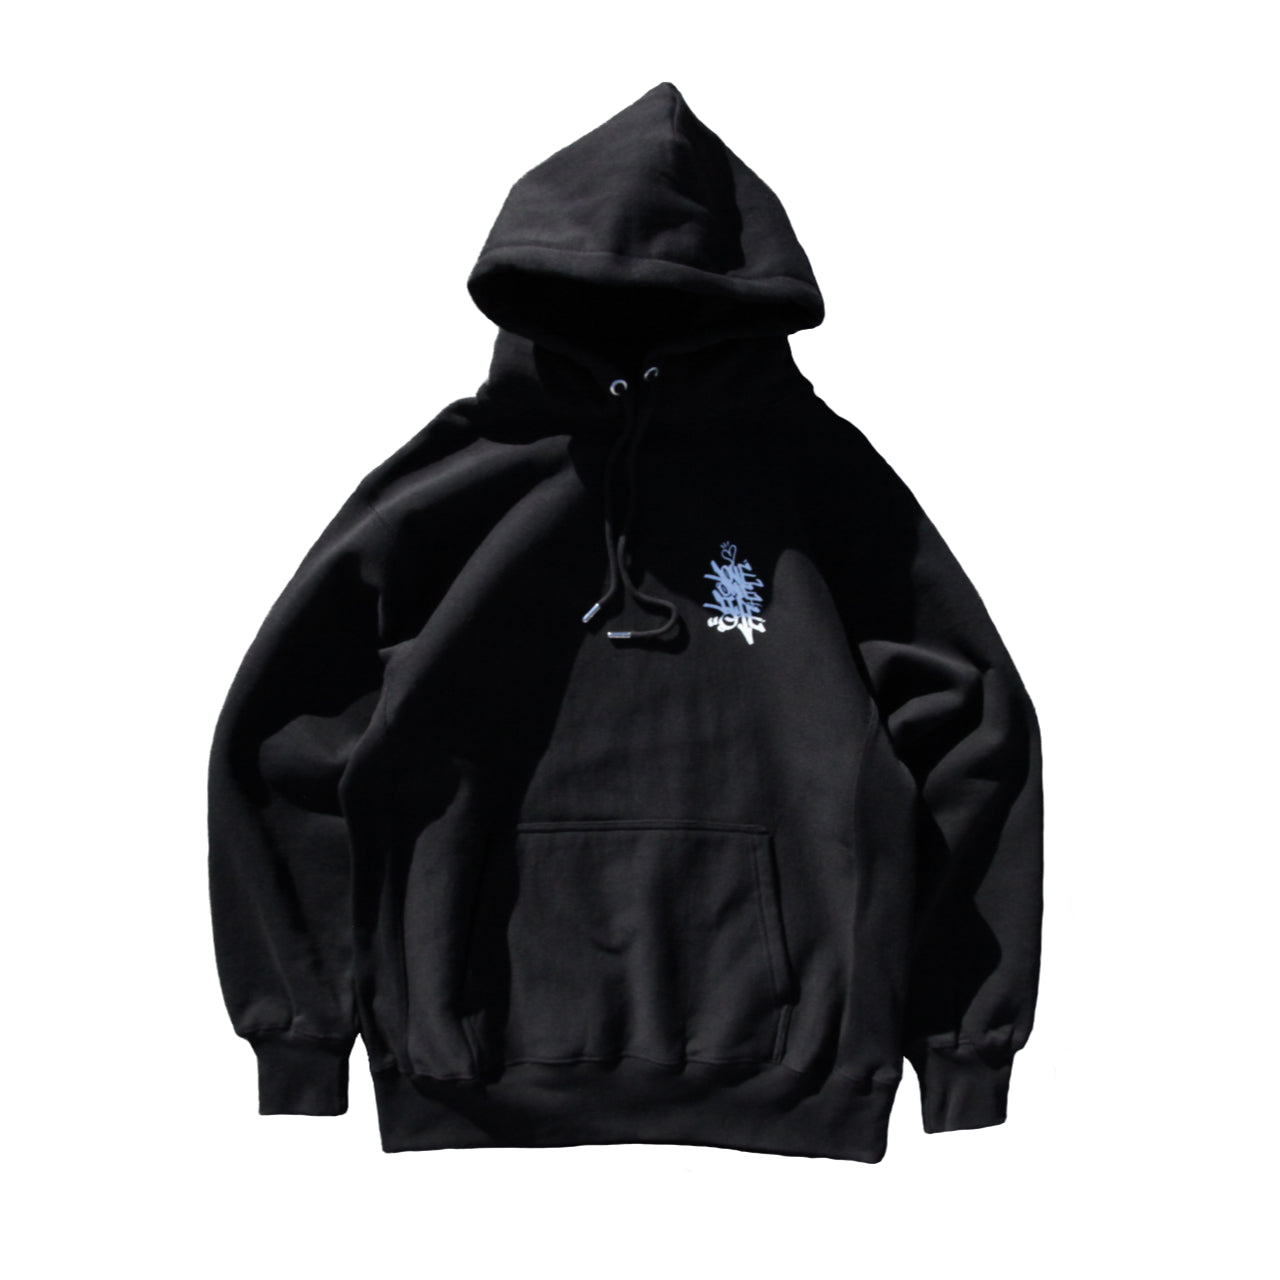 better soul reverse weave hoodie in black